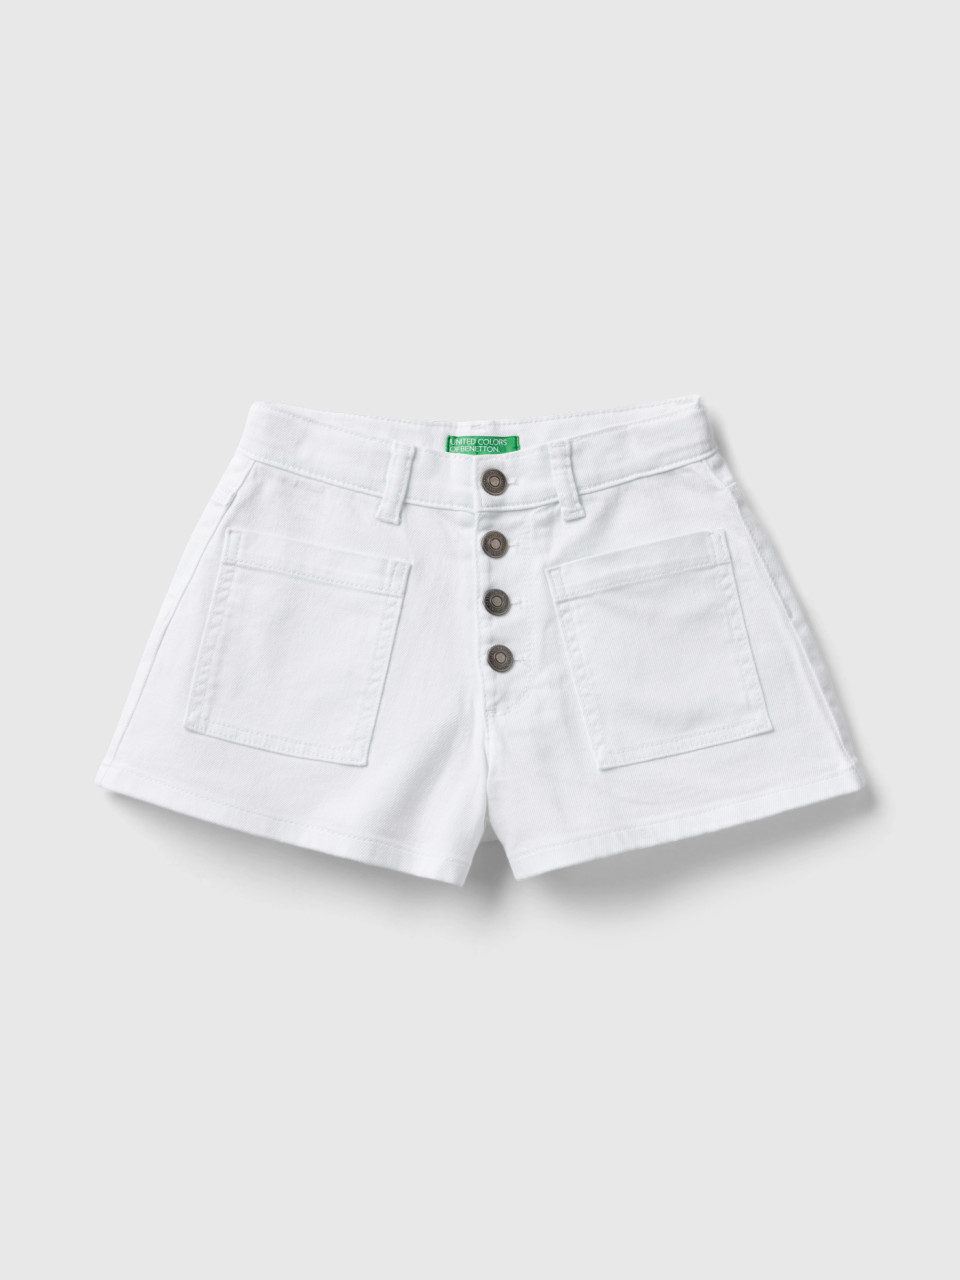 Benetton, Stretch Cotton Shorts, White, Kids